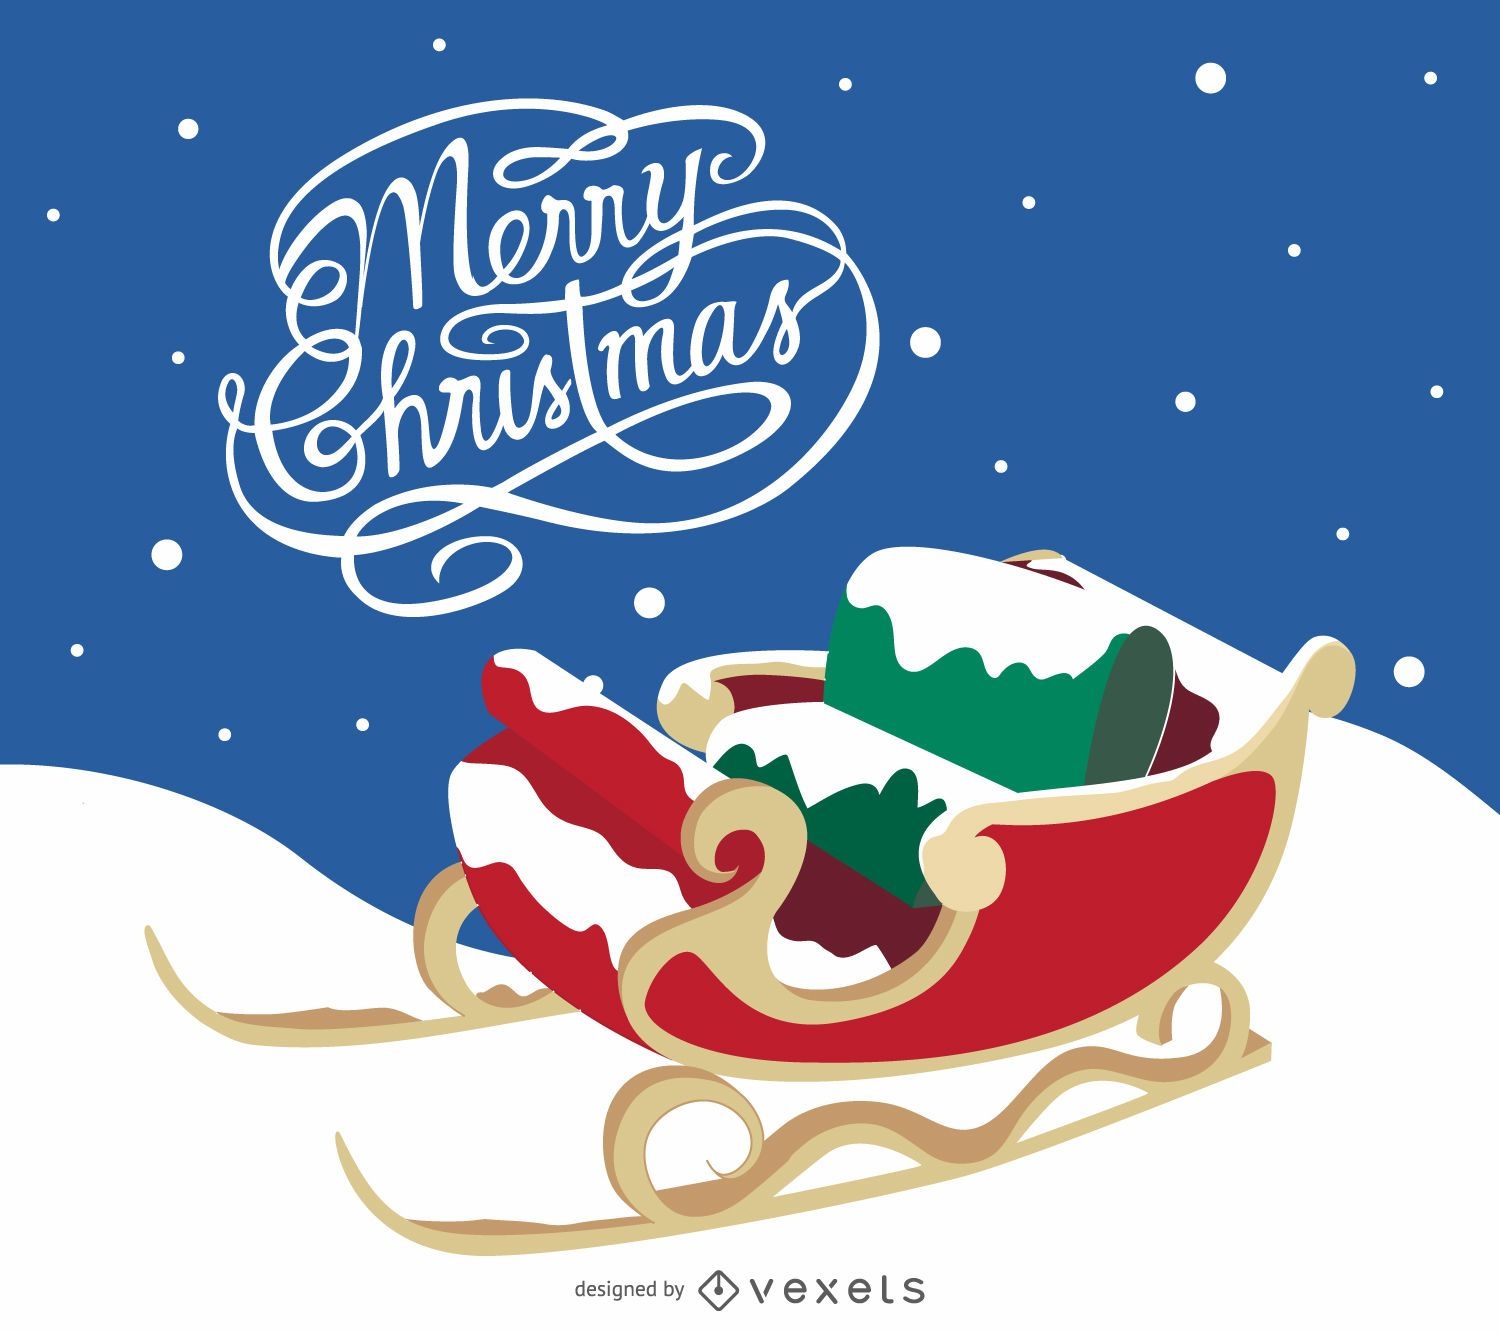 Merry Christmas card with sleigh on the snow